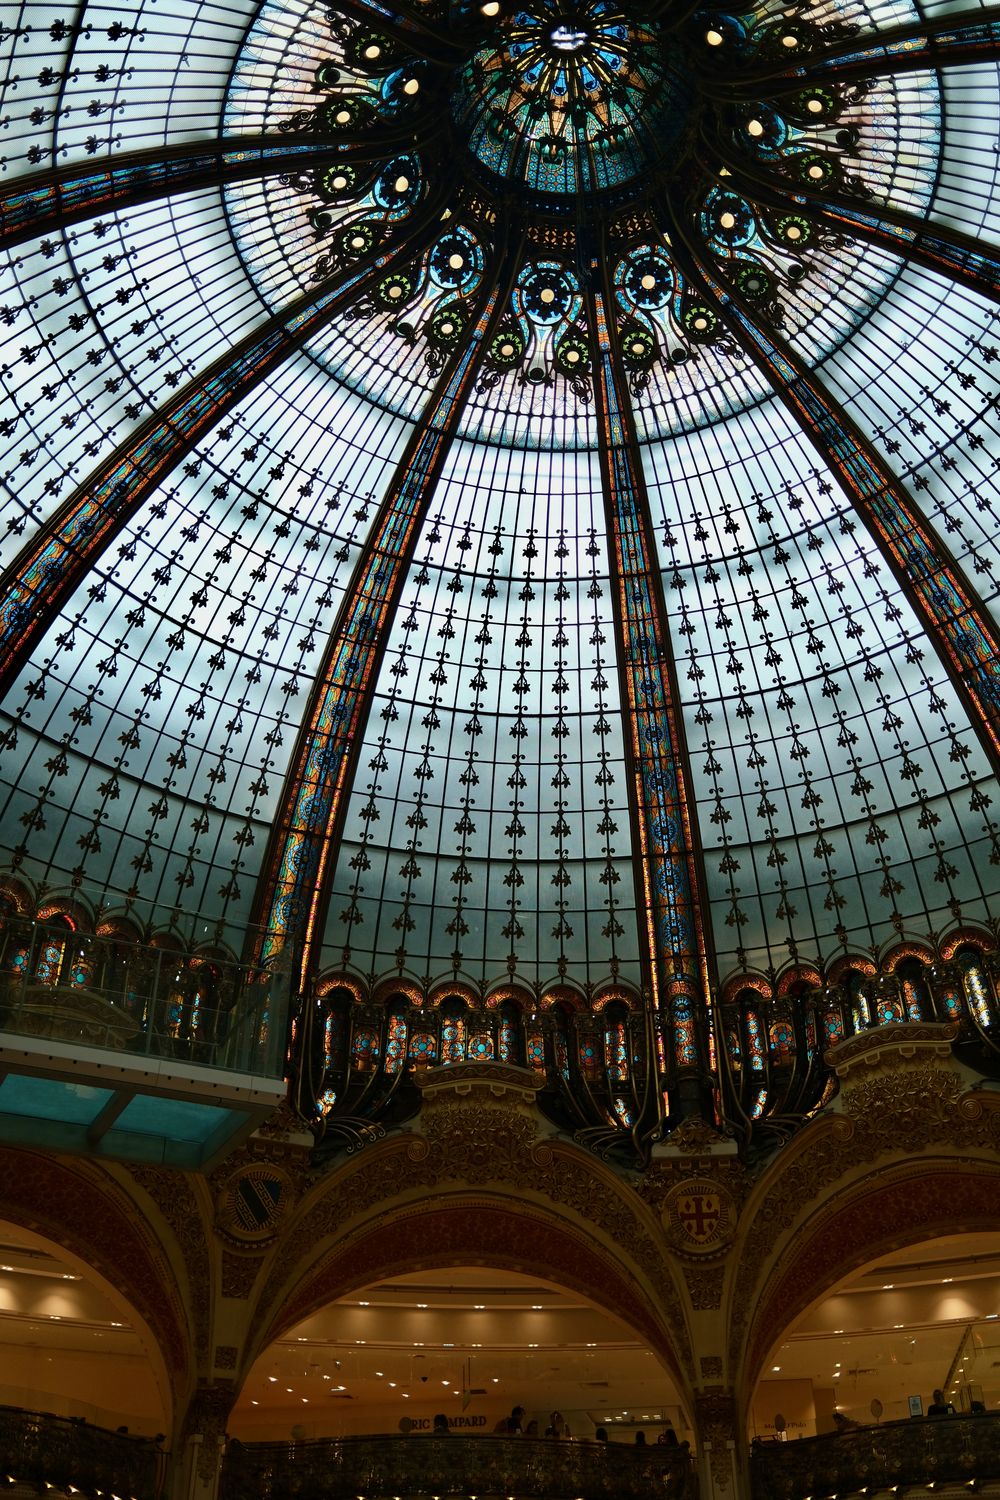 Galeries Lafayette Paris Haussmann Dome_DSCF2973